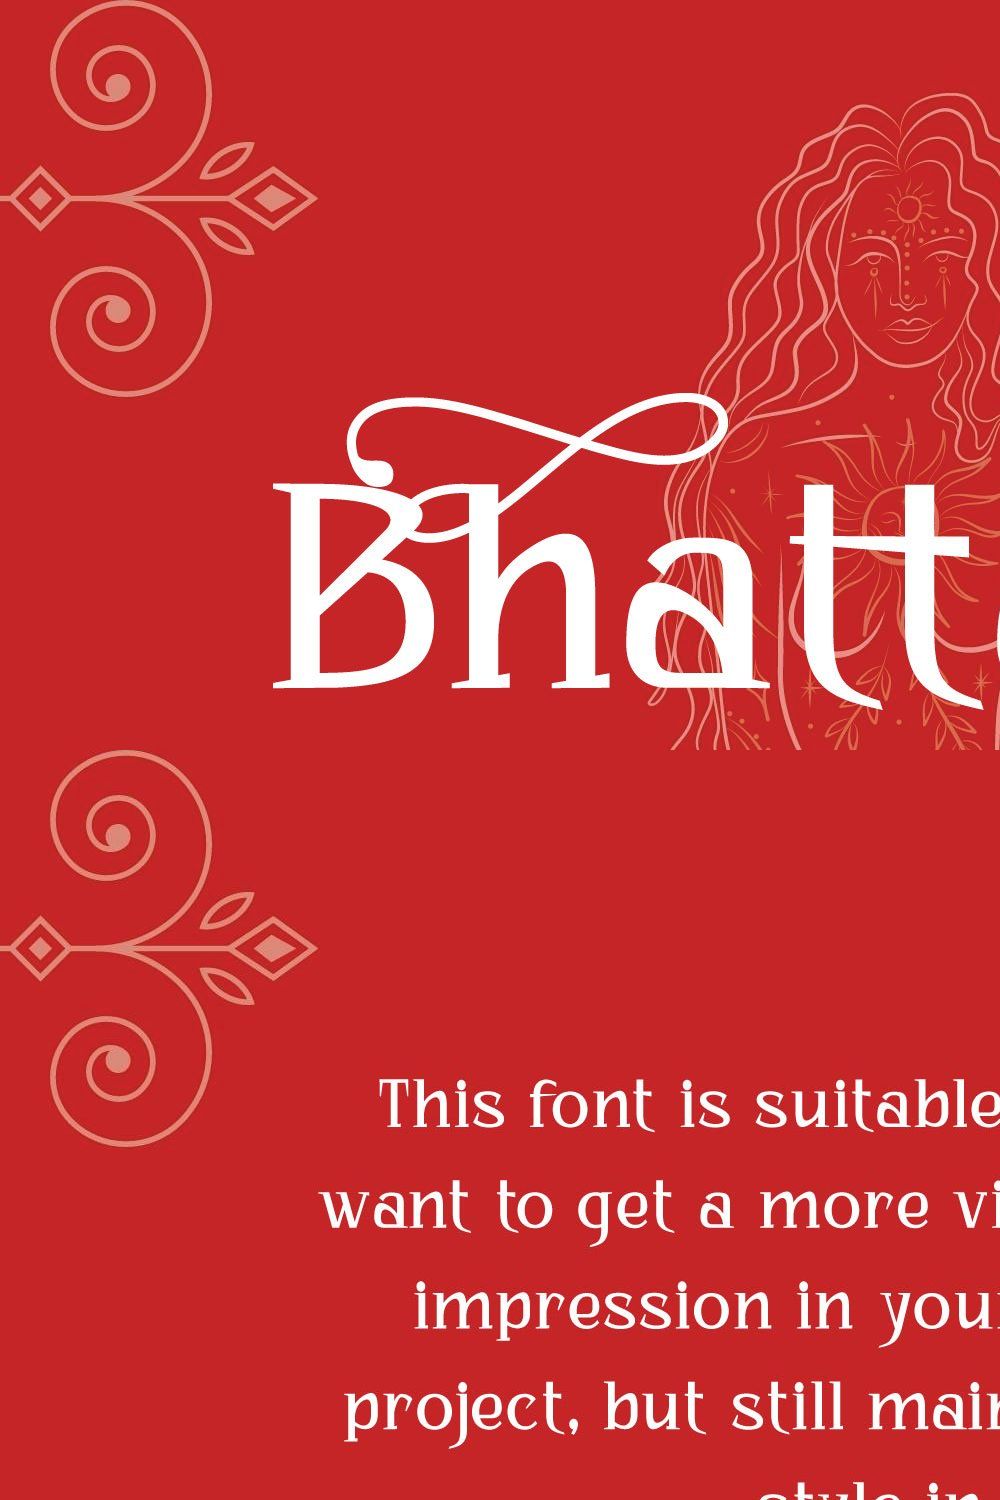 Bhattary - Retro Vintage Serif pinterest preview image.